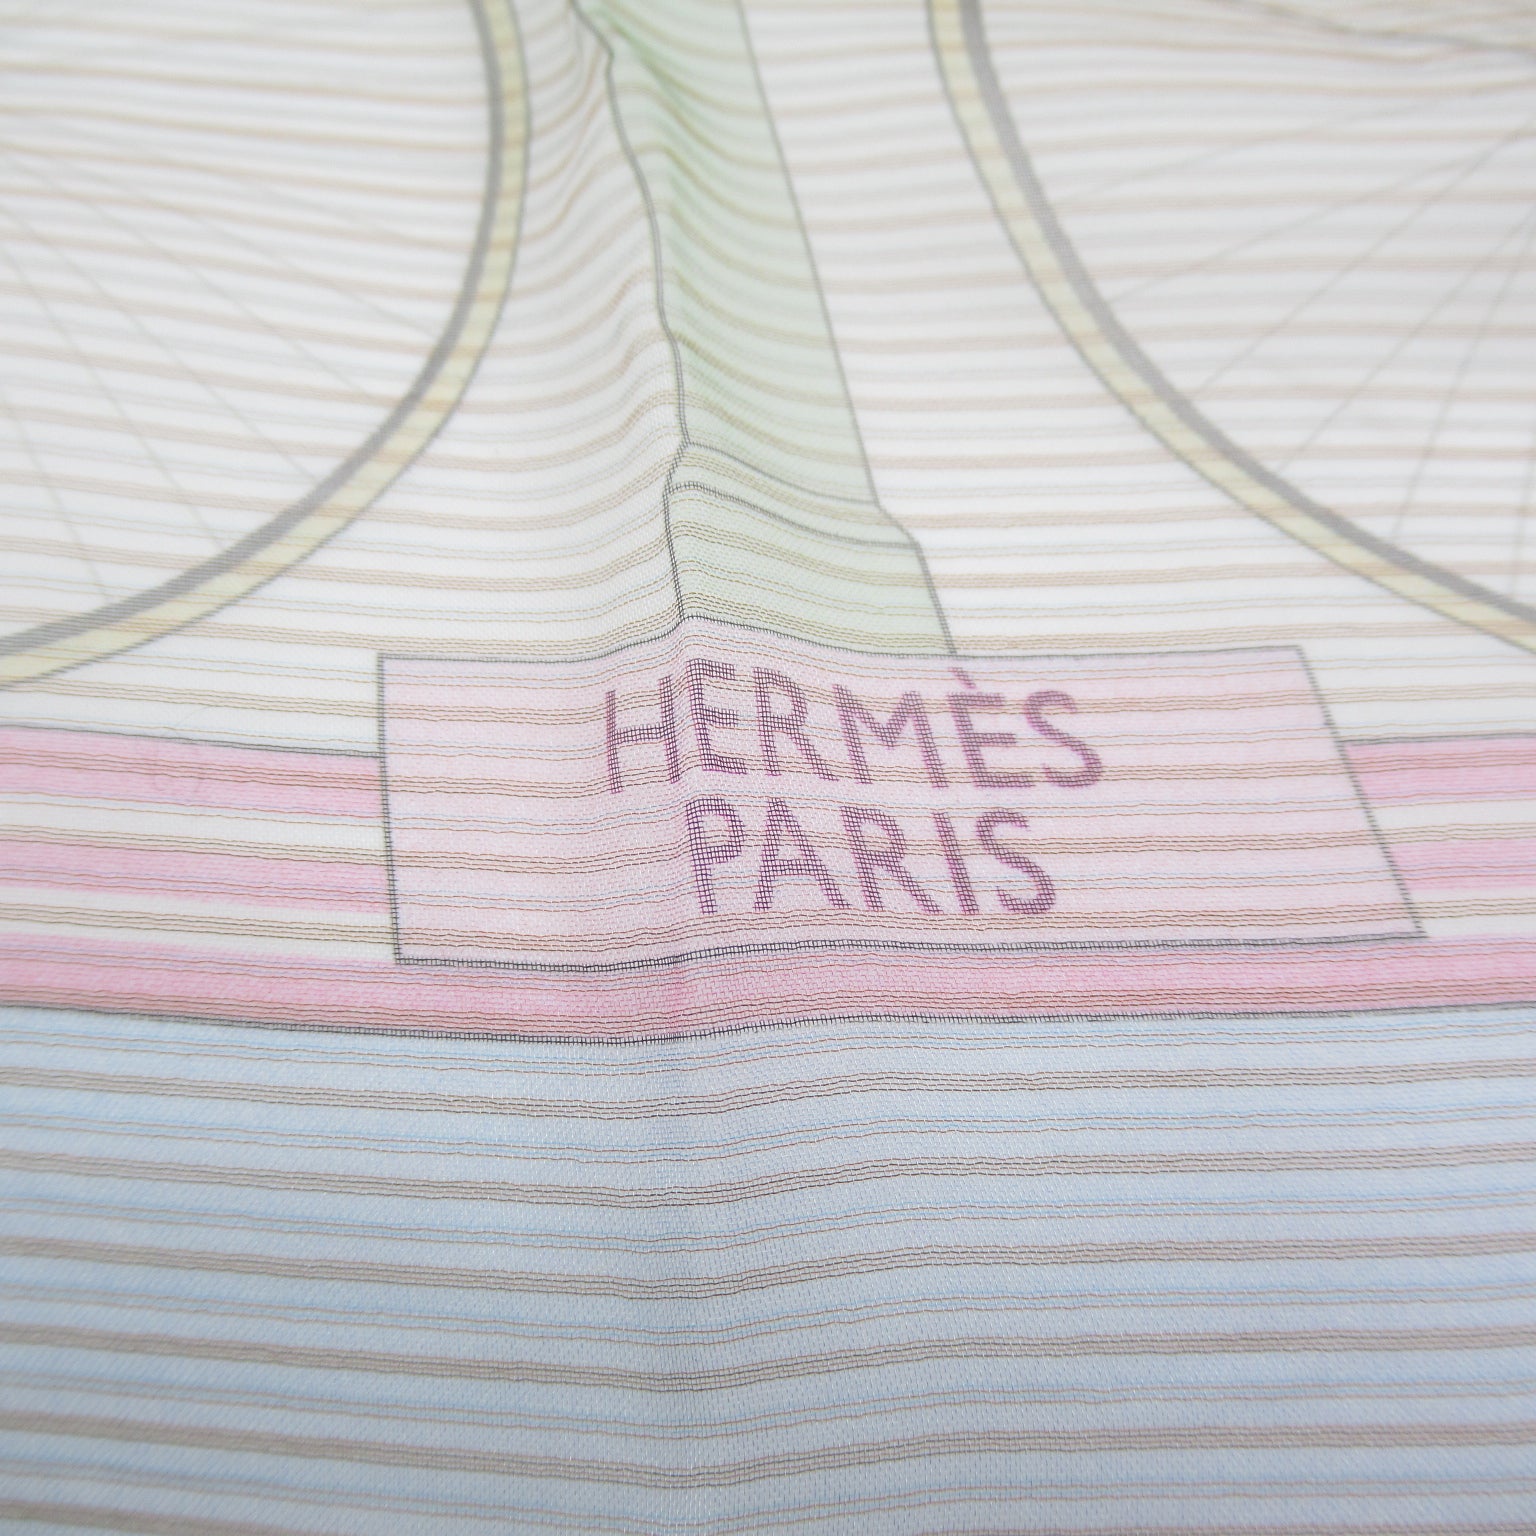 Hermes Kare 60 Shirt Clothes Silk  Orange Shirt Brand